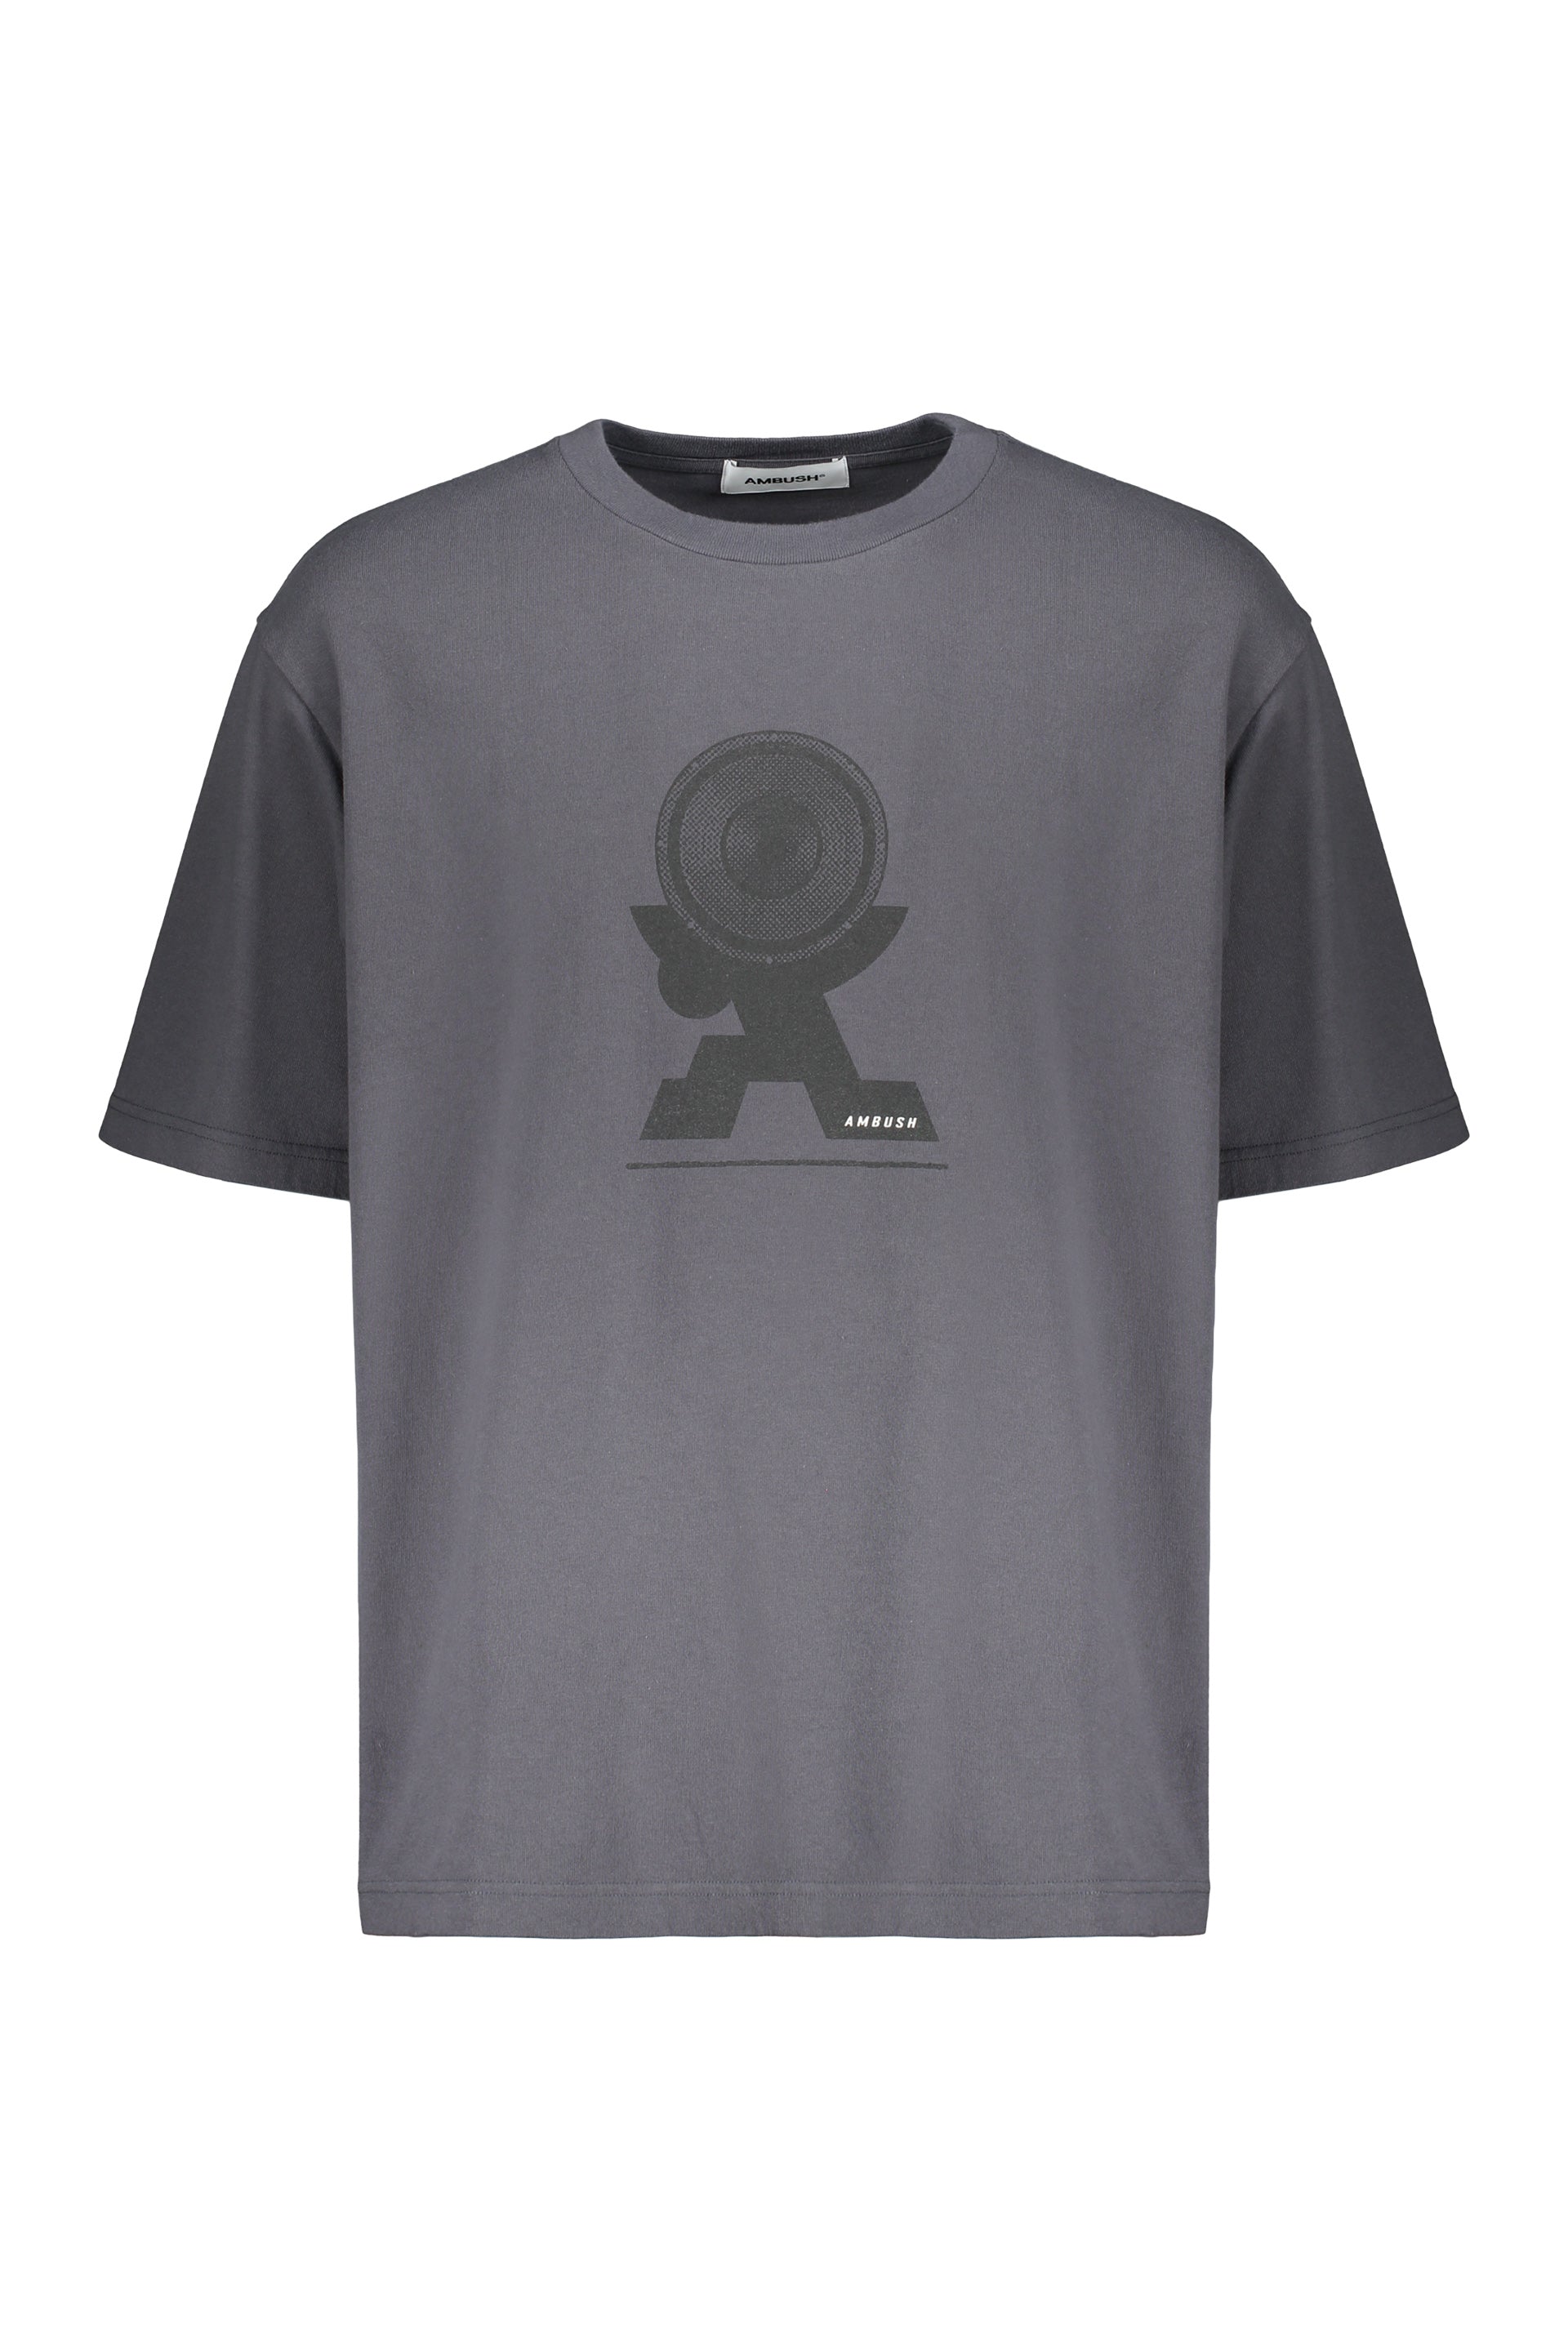 AMBUSH-OUTLET-SALE-Cotton-T-shirt-Shirts-L-ARCHIVE-COLLECTION_b6eb9873-1443-4771-baae-caf9ef2c85ed.jpg